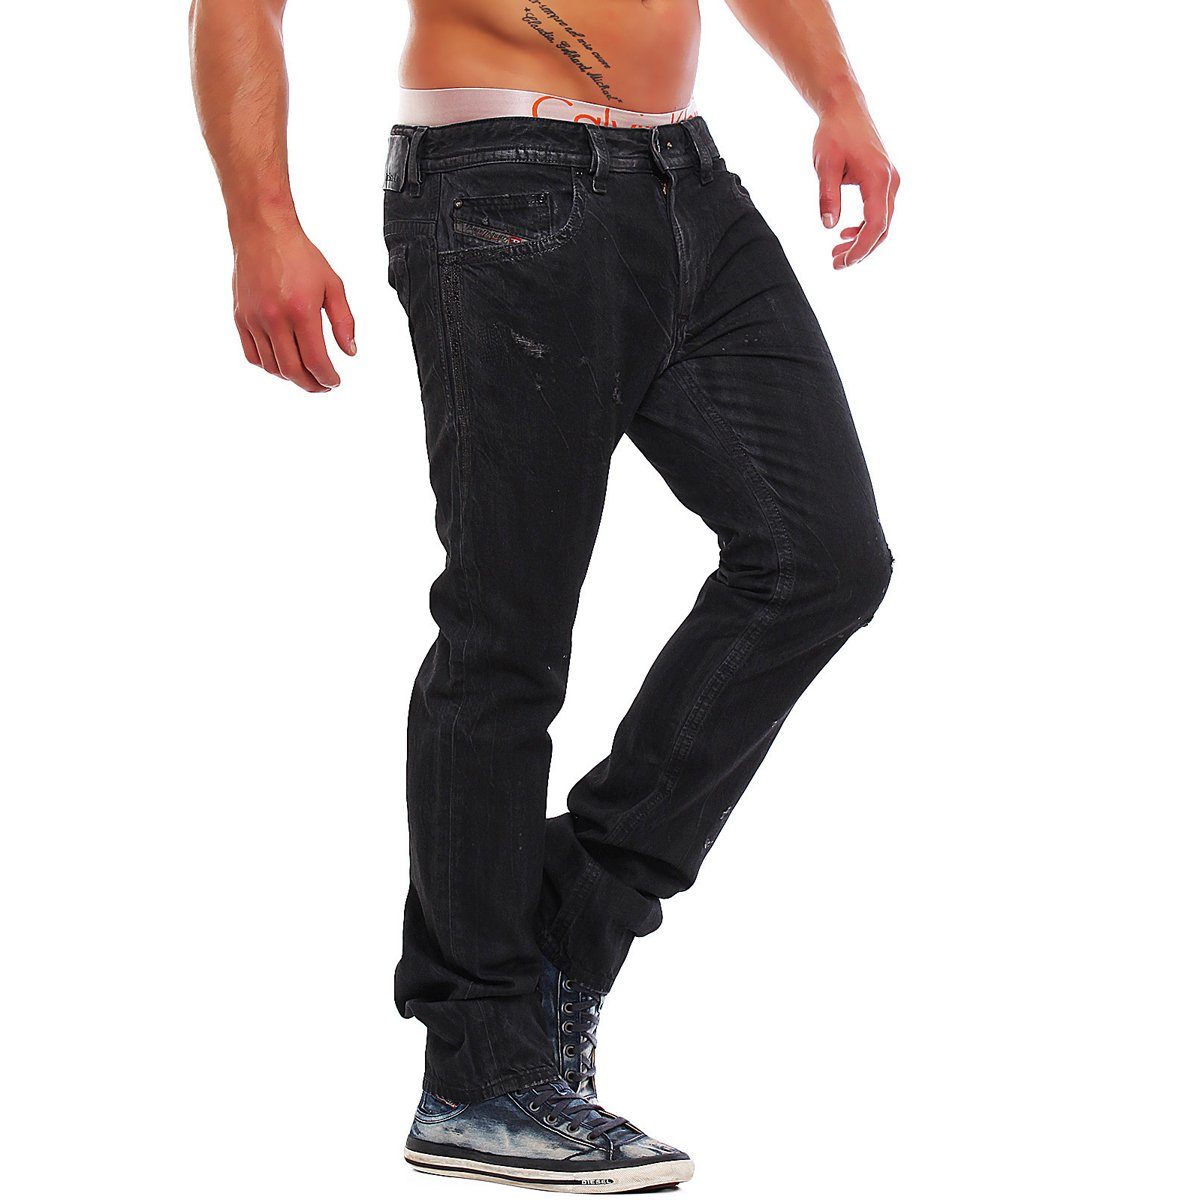 Länge: 0809N Herren Edition, Vintage-Used-Look, Slim-fit-Jeans Limited Diesel Anthrazit-Grau, 5-Pocket-Style, L32 Thavar Röhrenjeans,